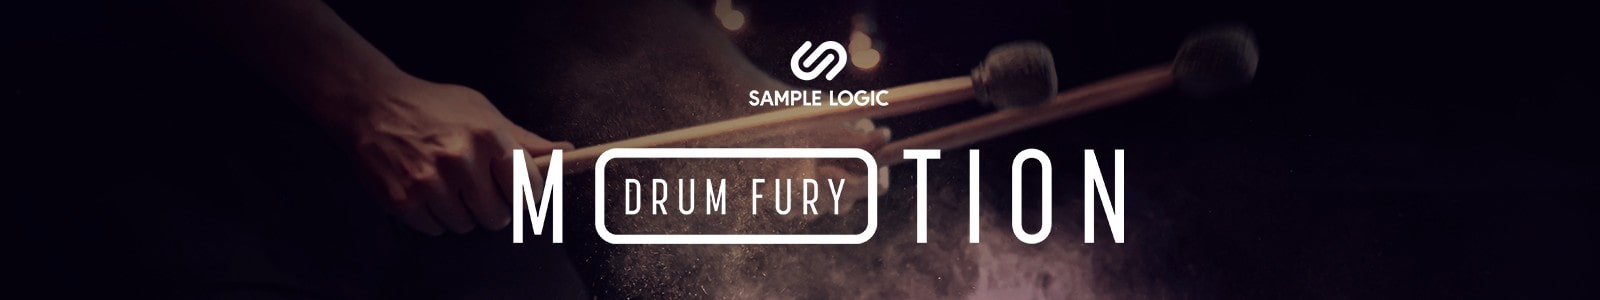 Drum Fury Motion by Sample Logic